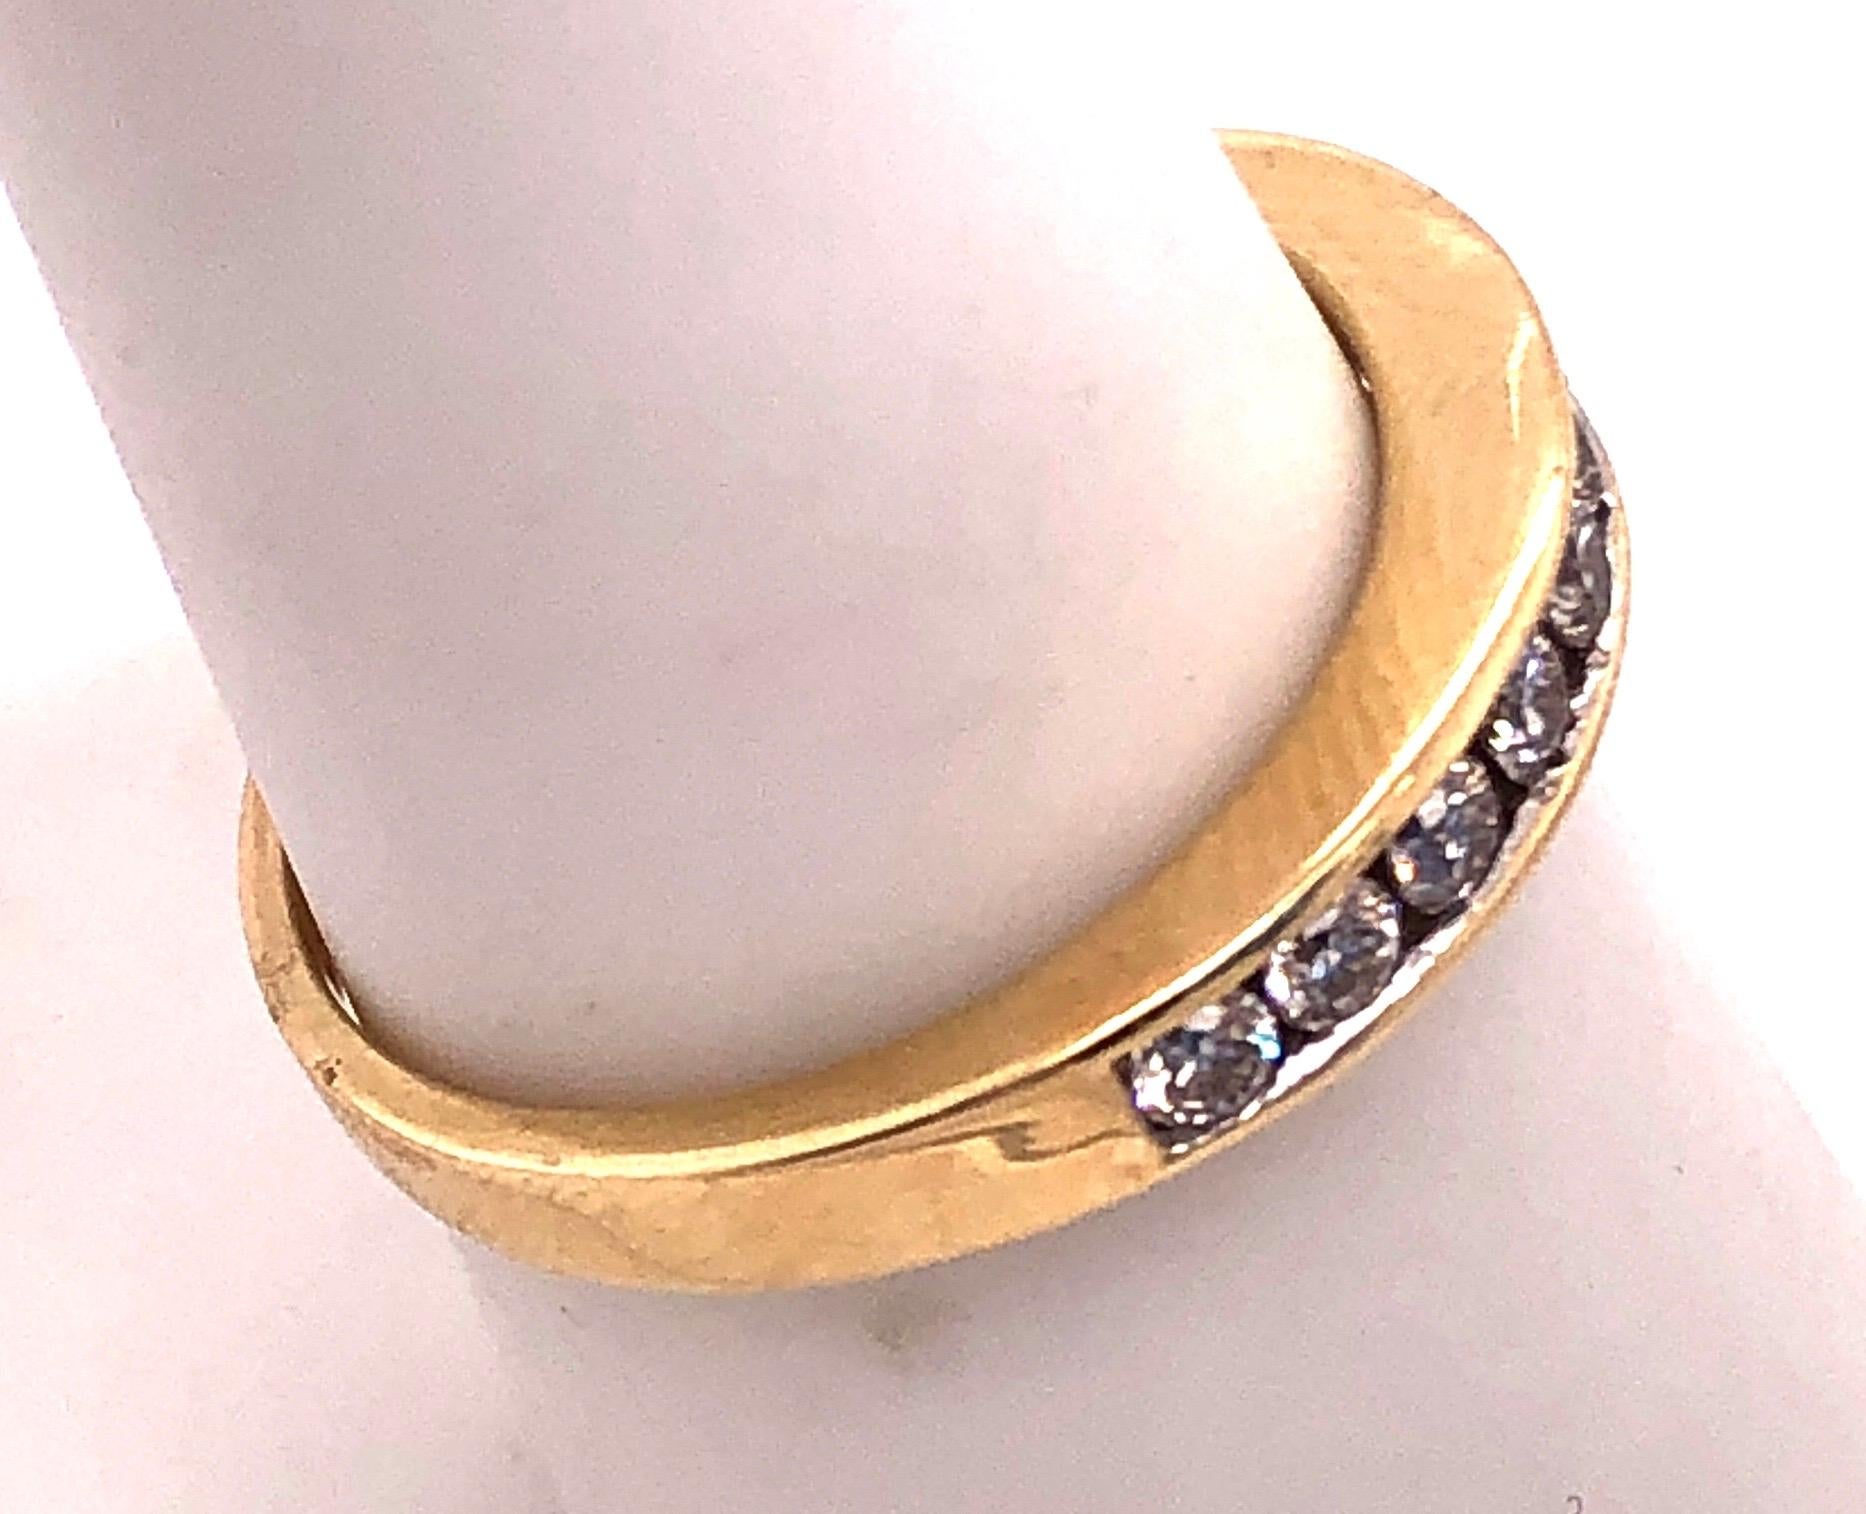 14 Karat Yellow Gold And Diamond Band Wedding Anniversary Ring 0.75 TDW.
Size 5.25
2.71 grams total weight.